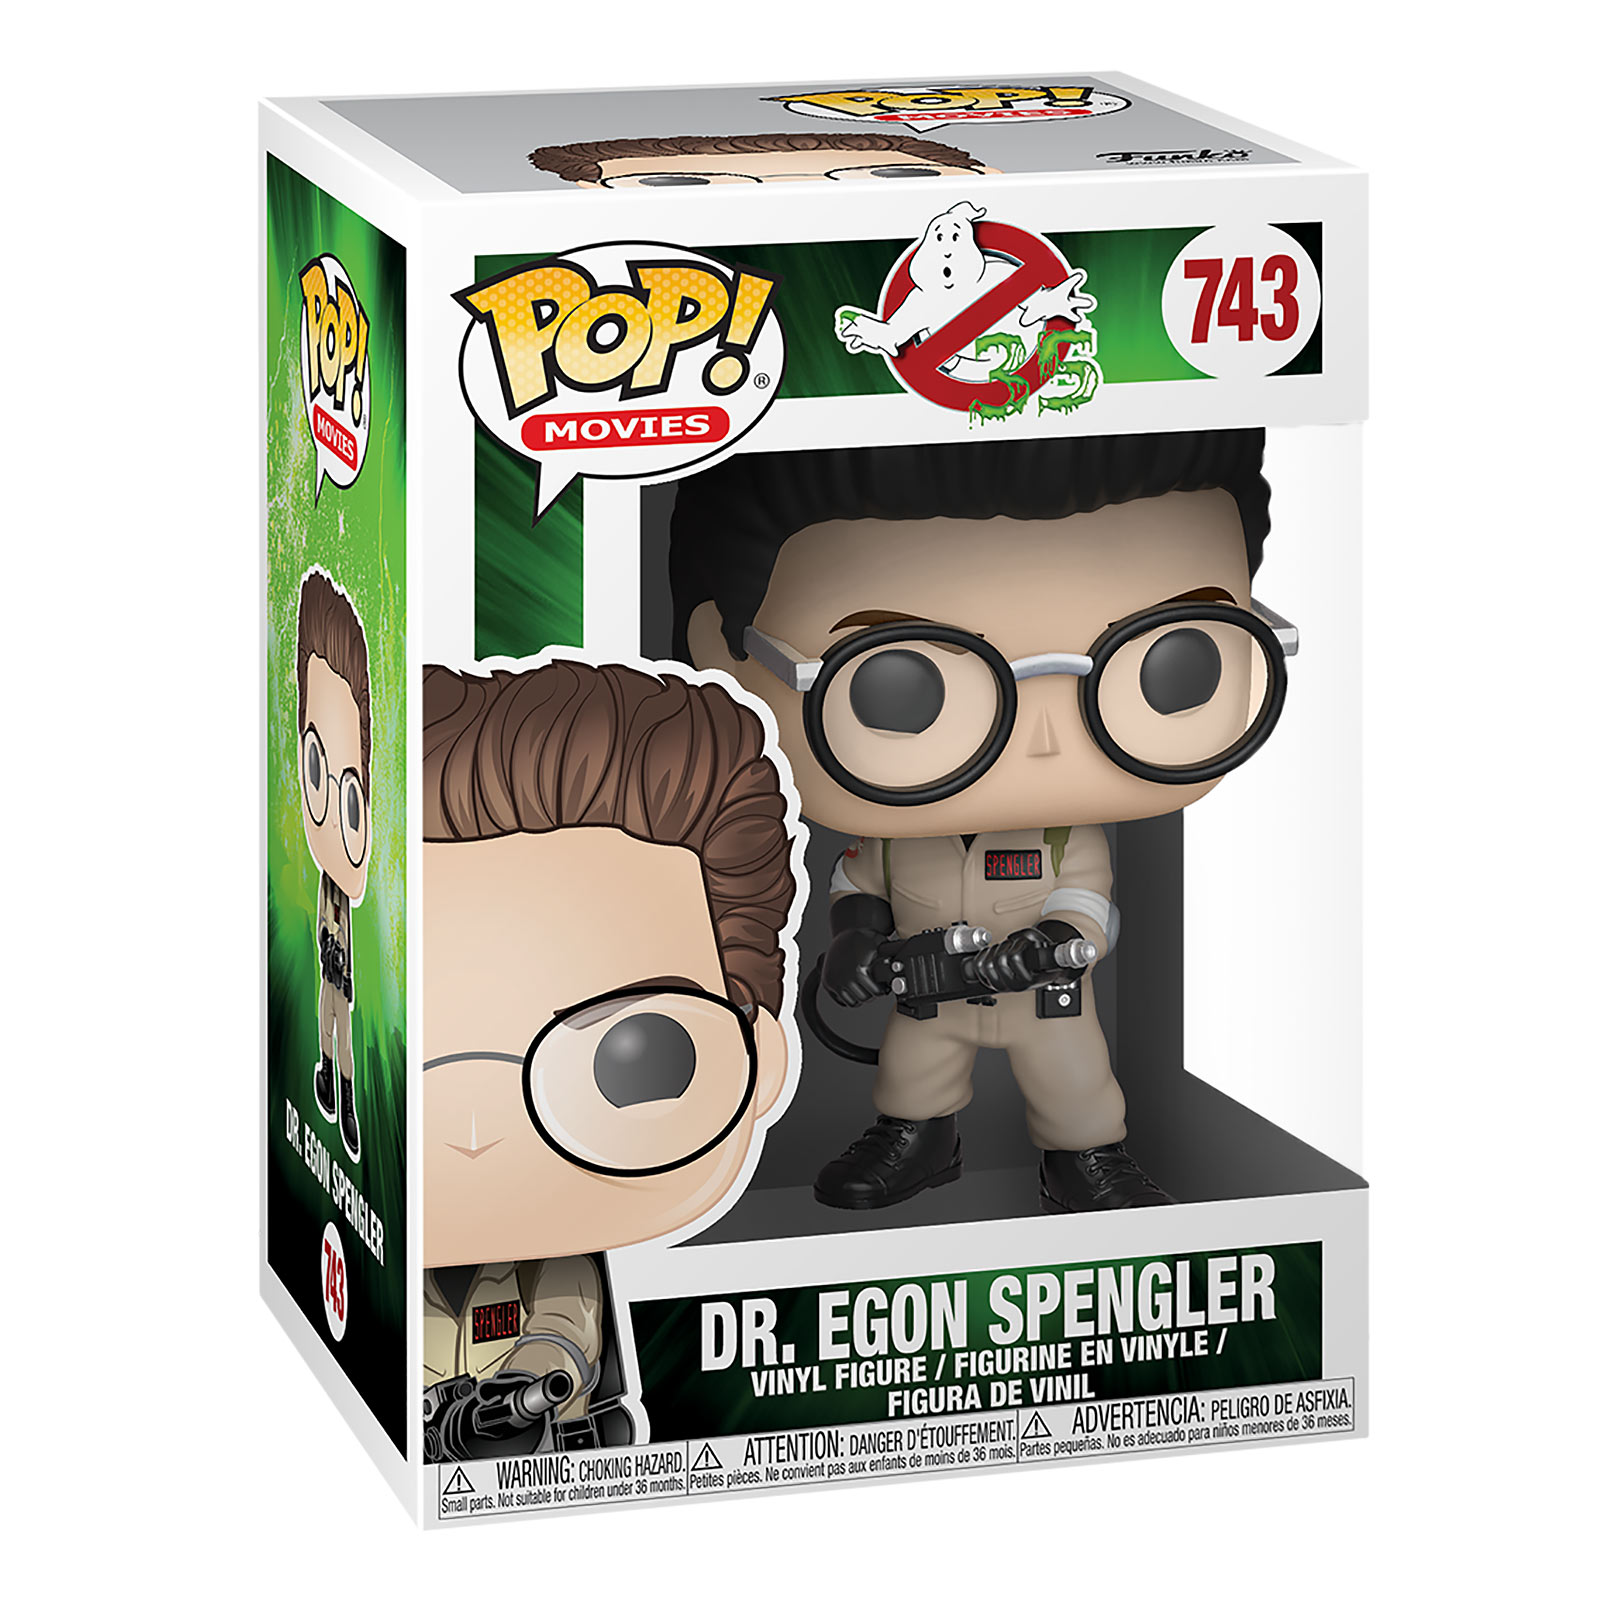 Ghostbusters - Dr. Egon Spengler Funko Pop Figure